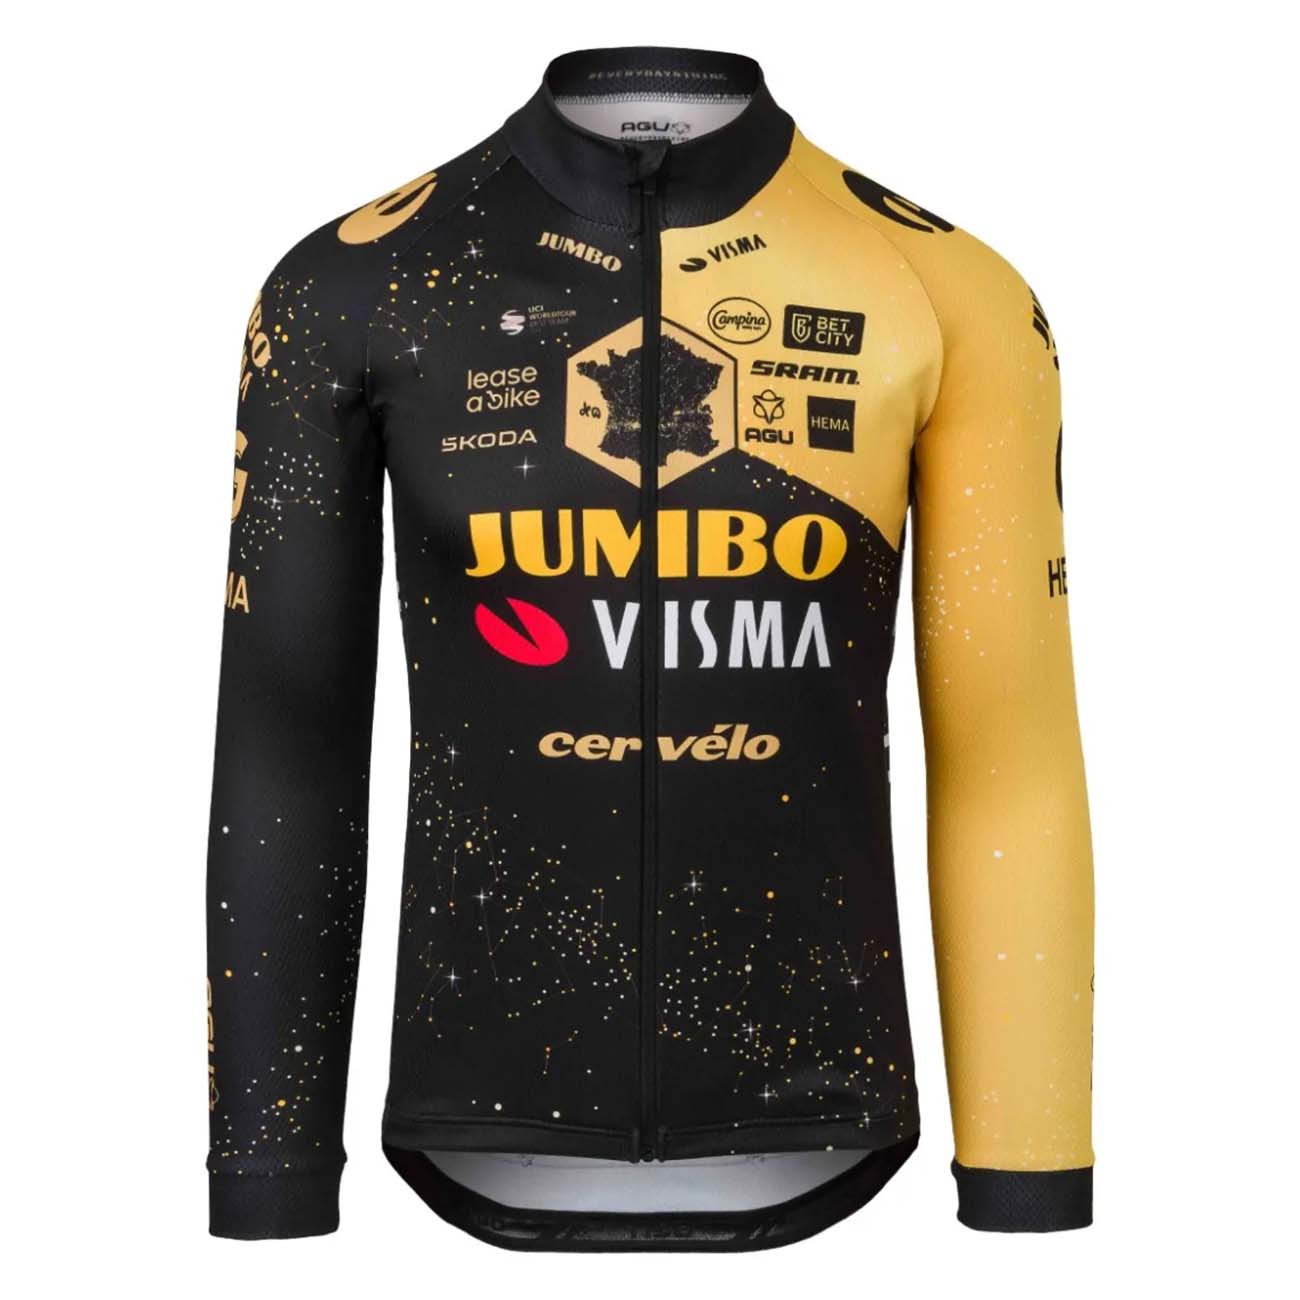 AGU Cyklistický dres s dlouhým rukávem letní - AGU JUMBO-VISMA VELO - černá/žlutá 2XL